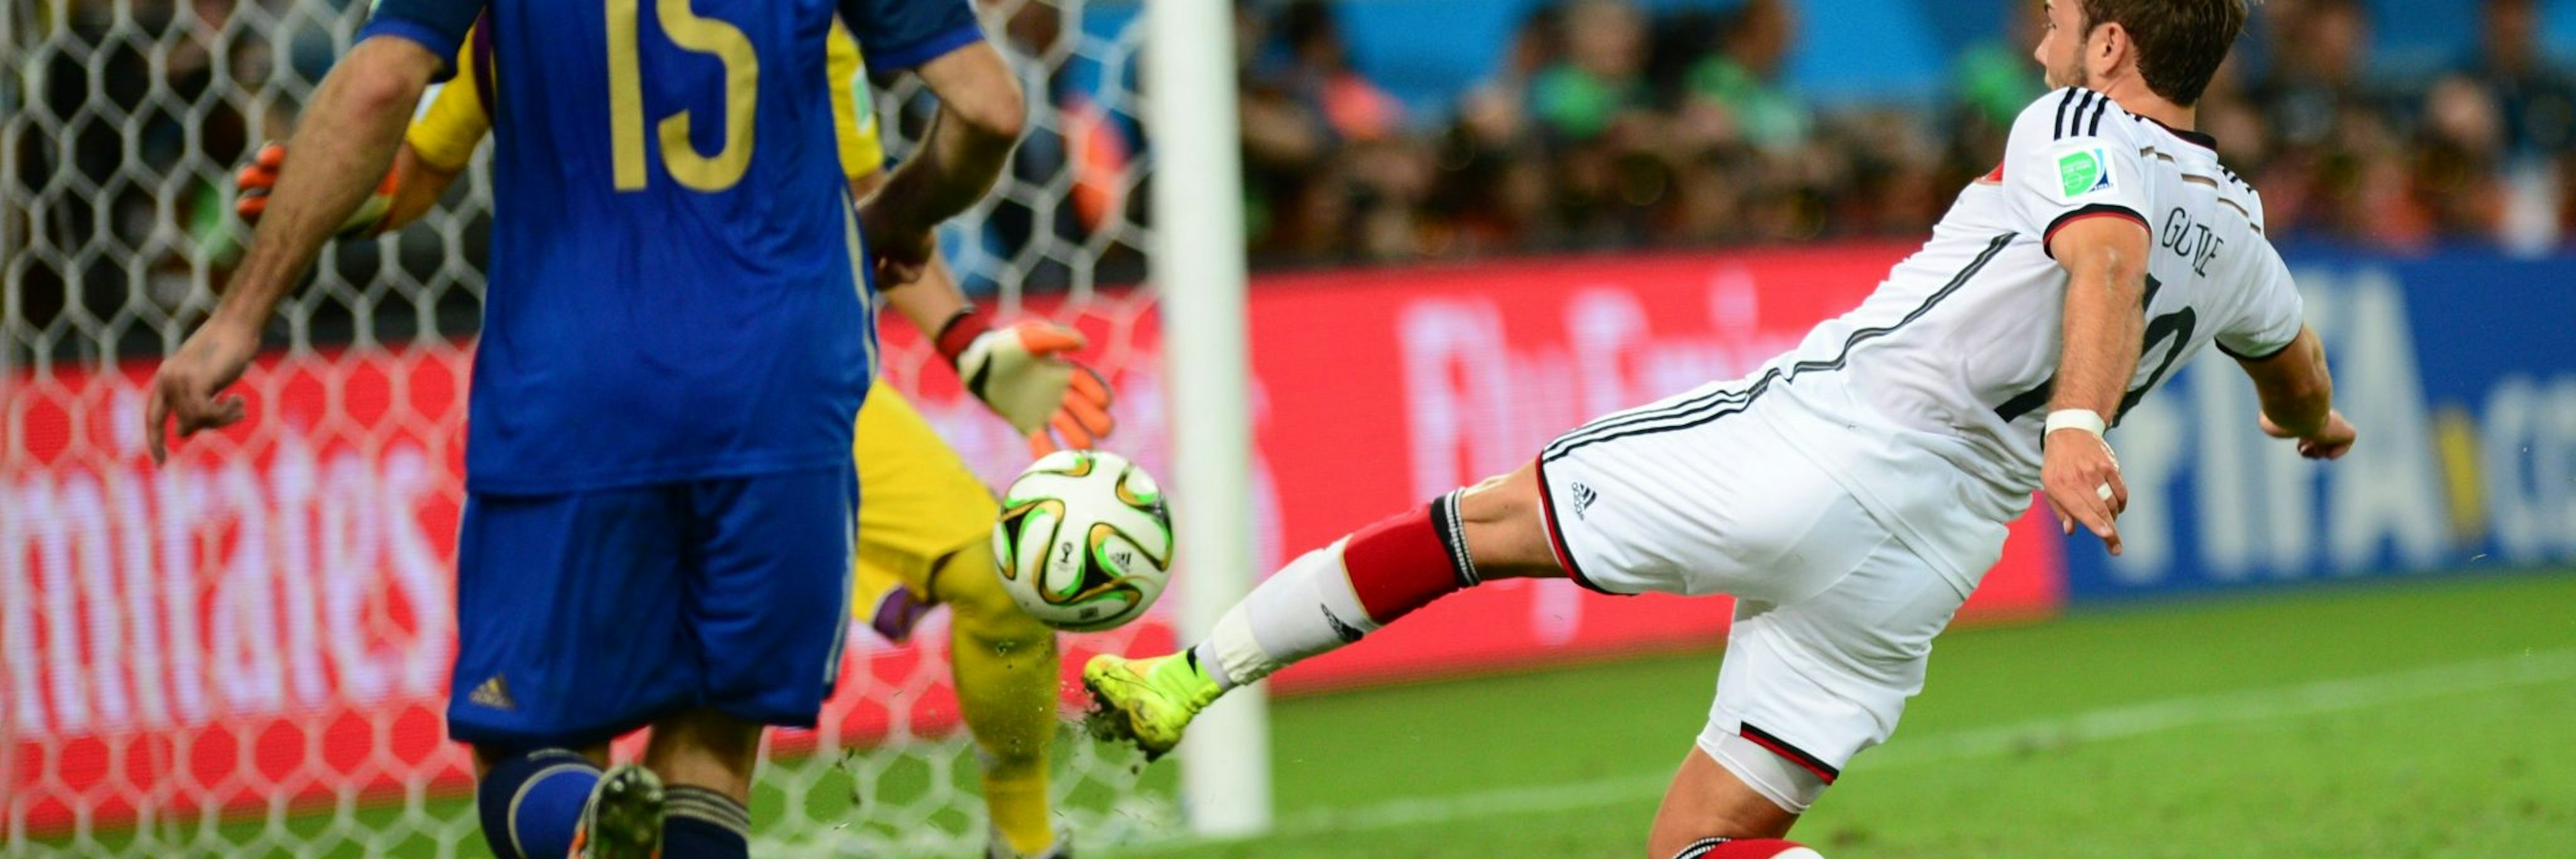 Mario Gotze scores against Argentina in 2014 World Cup